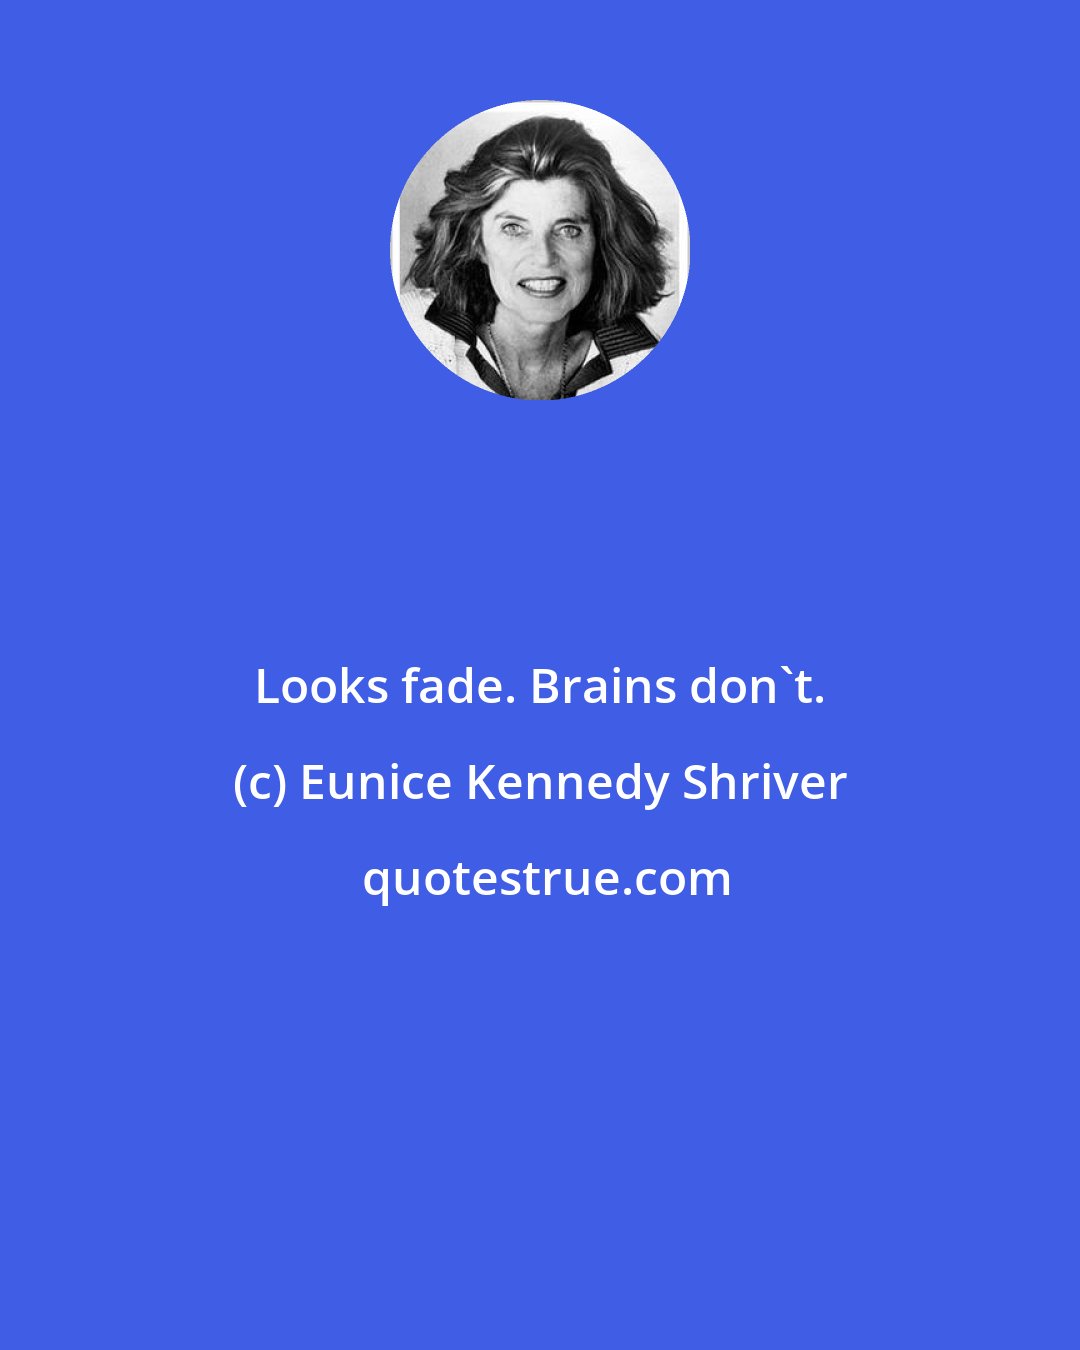 Eunice Kennedy Shriver: Looks fade. Brains don't.